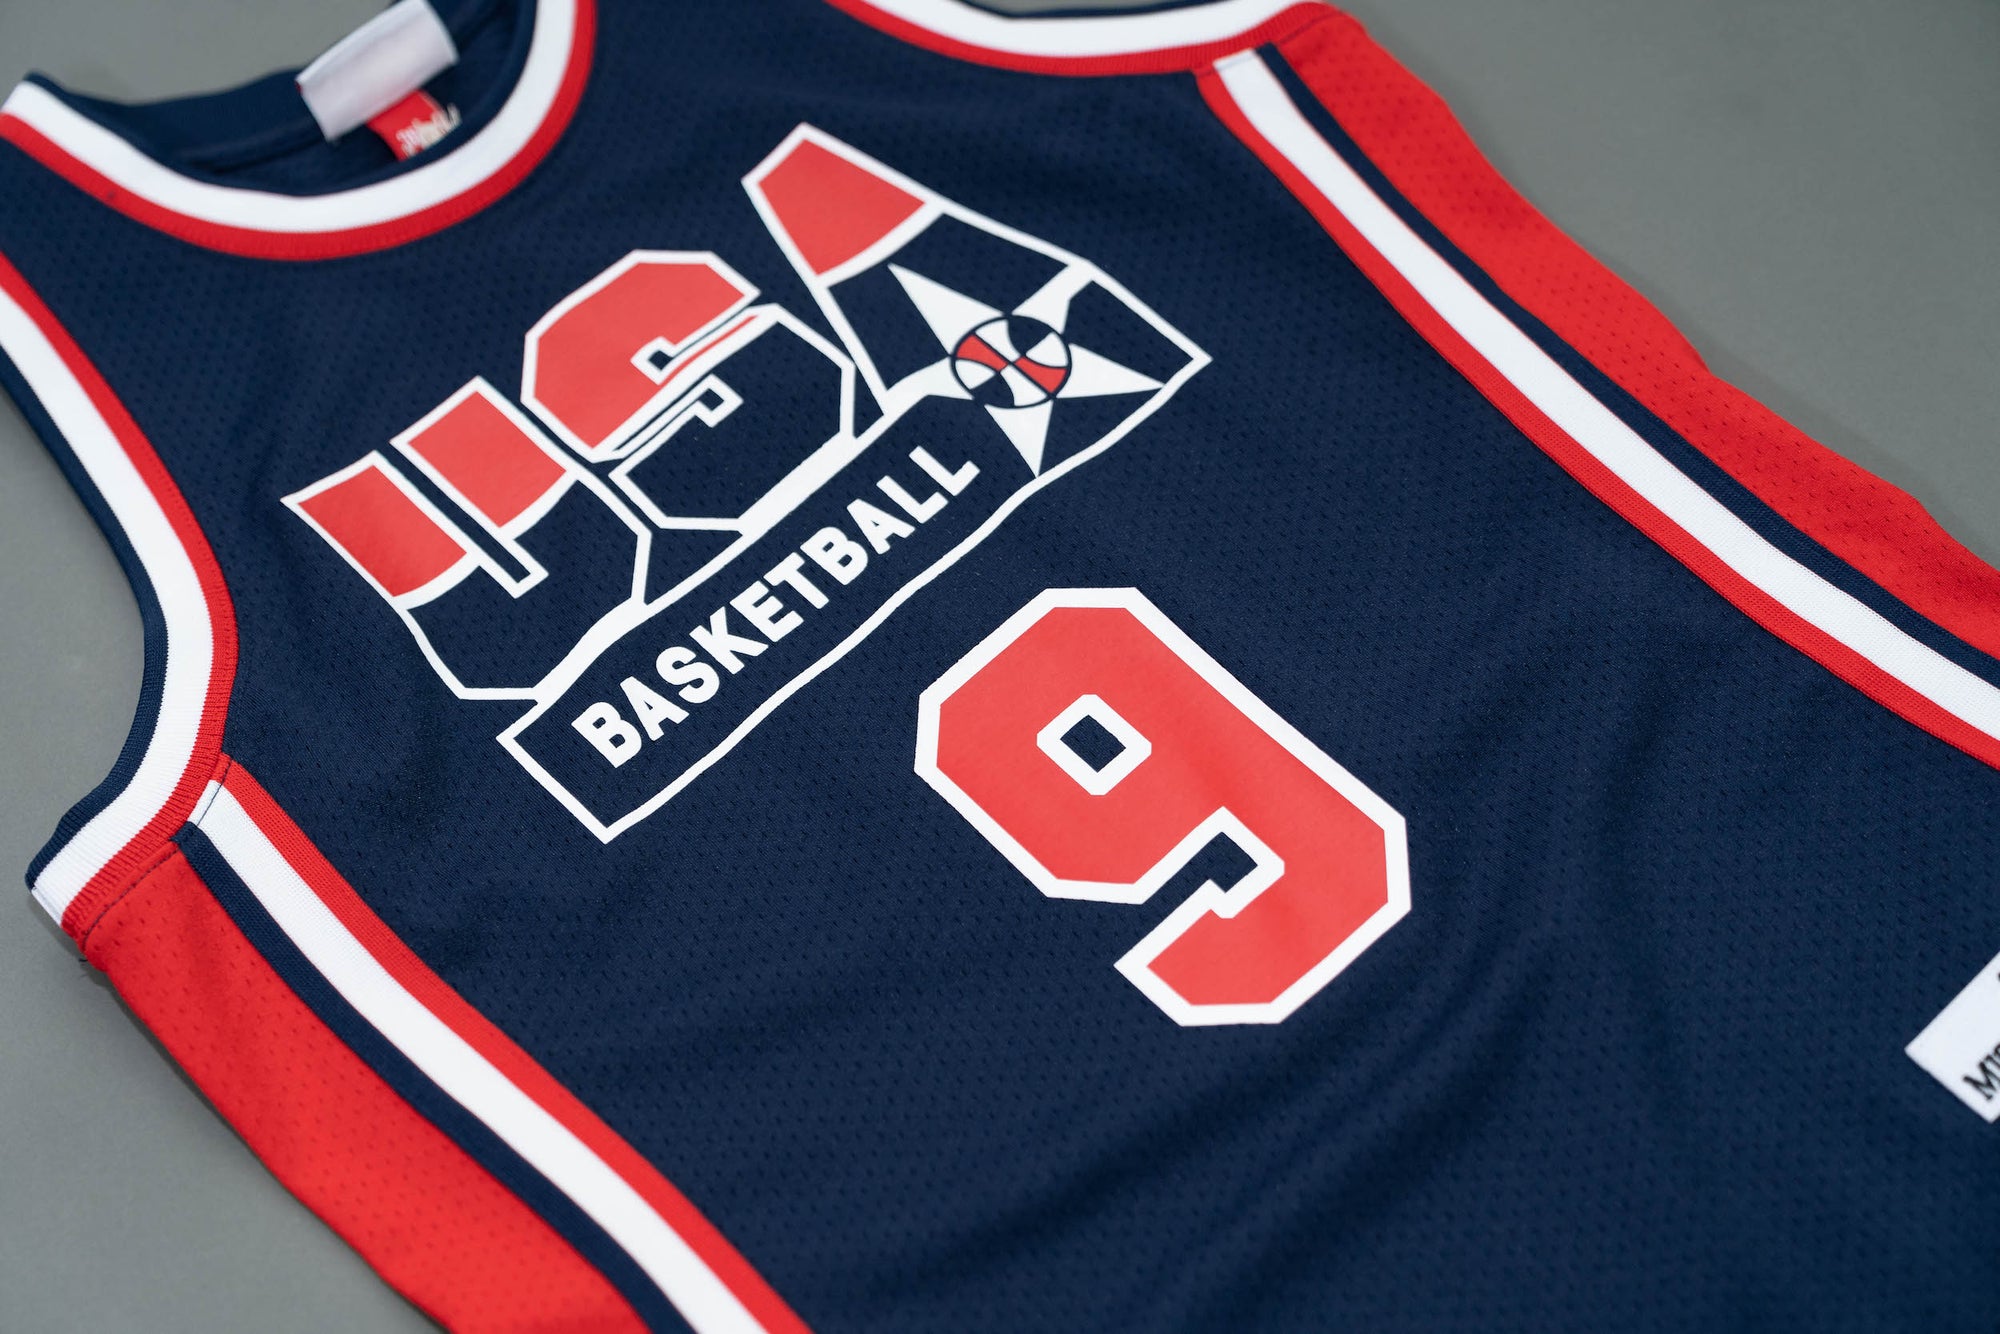 Michael Jordan 1992 Olympics Dream Team USA Throwback Authentic Jersey